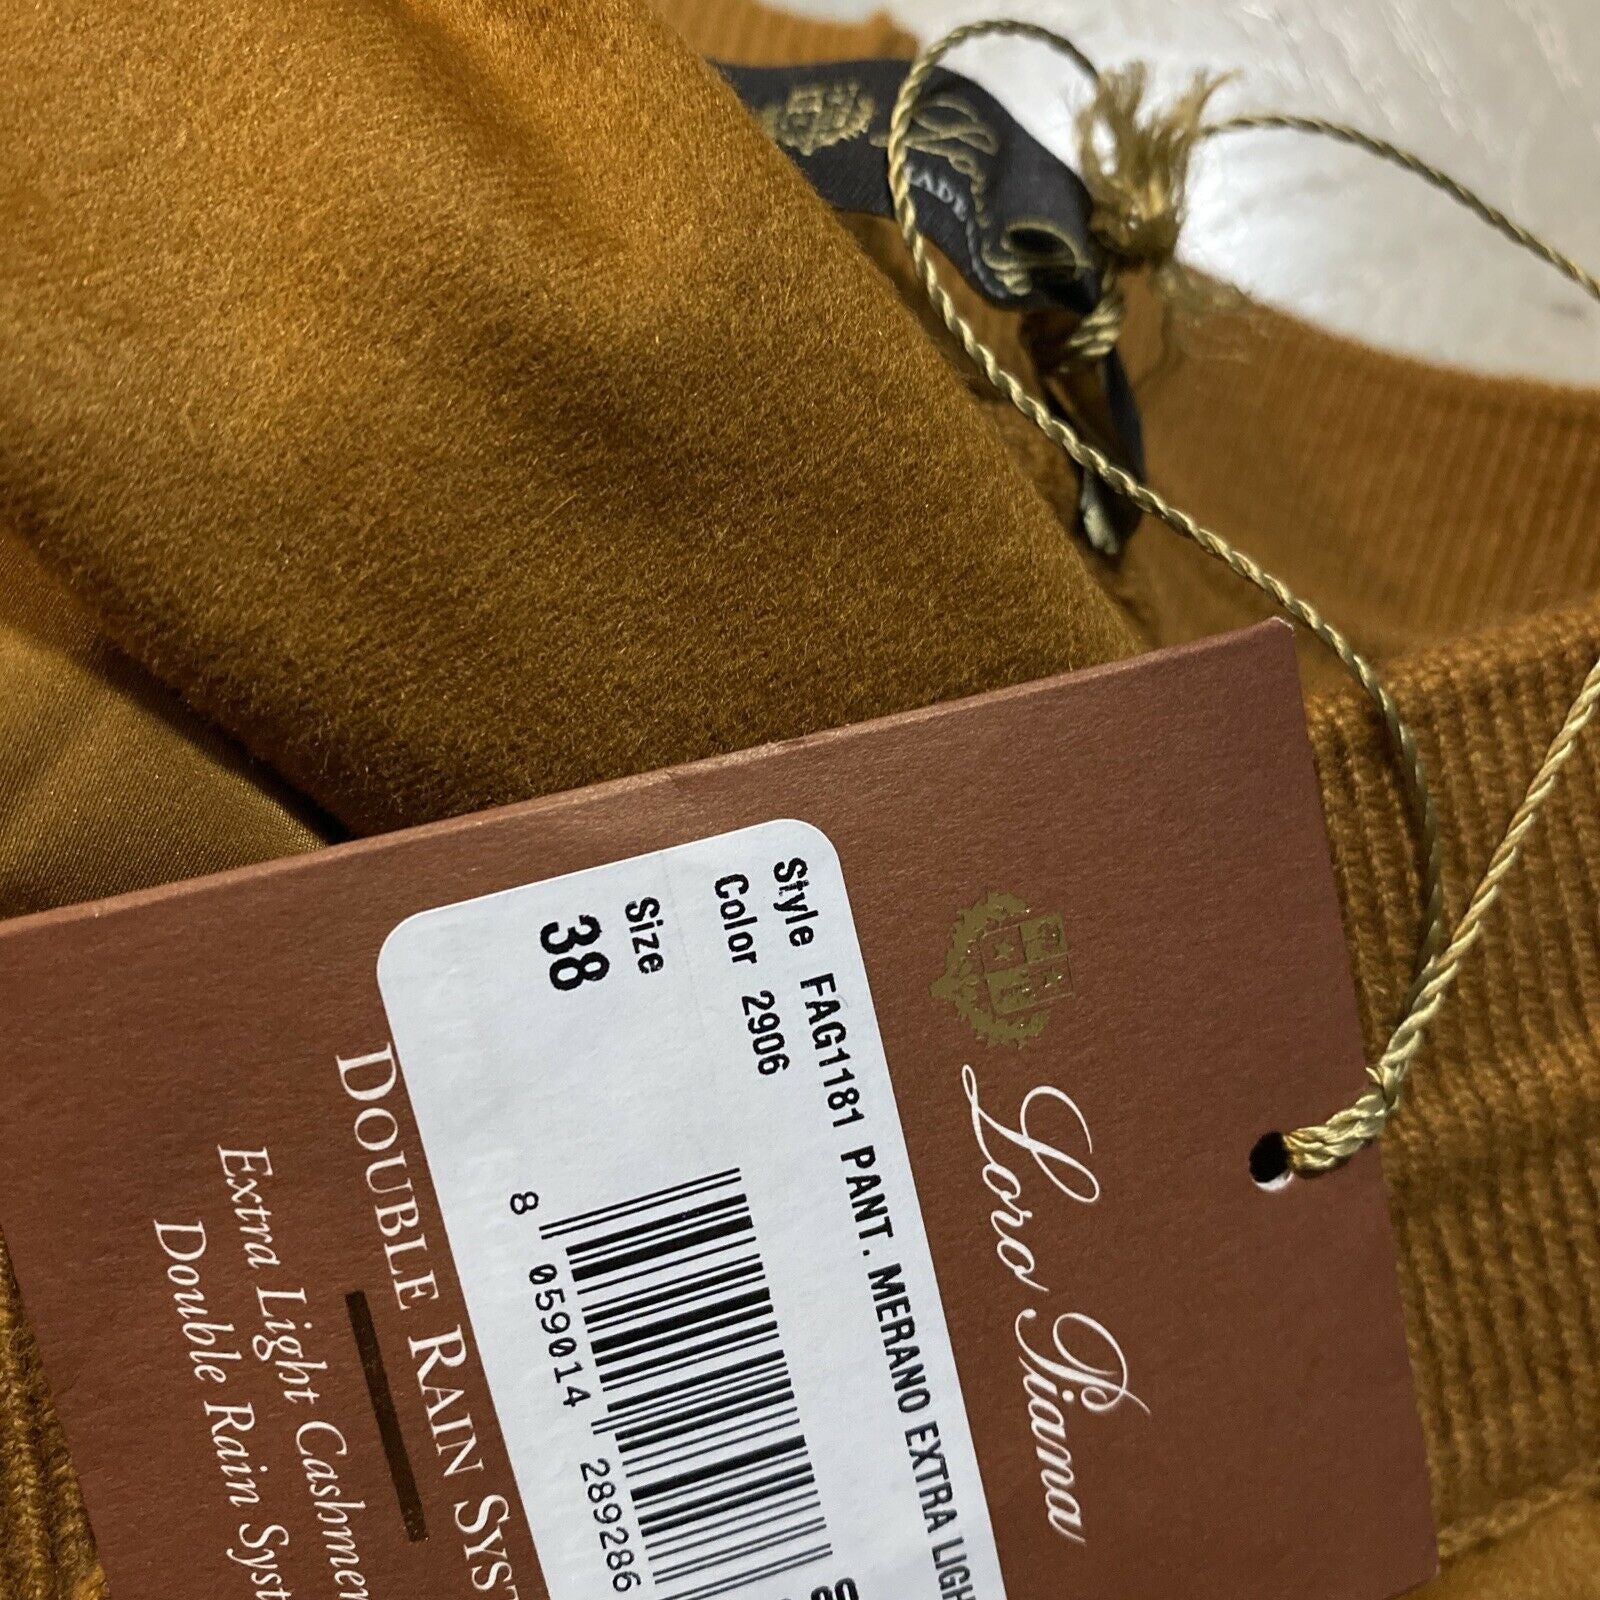 New $2875 Loro Piana Women Cashmere/Silk Sweatpants Pants Golden 4 US/38 It